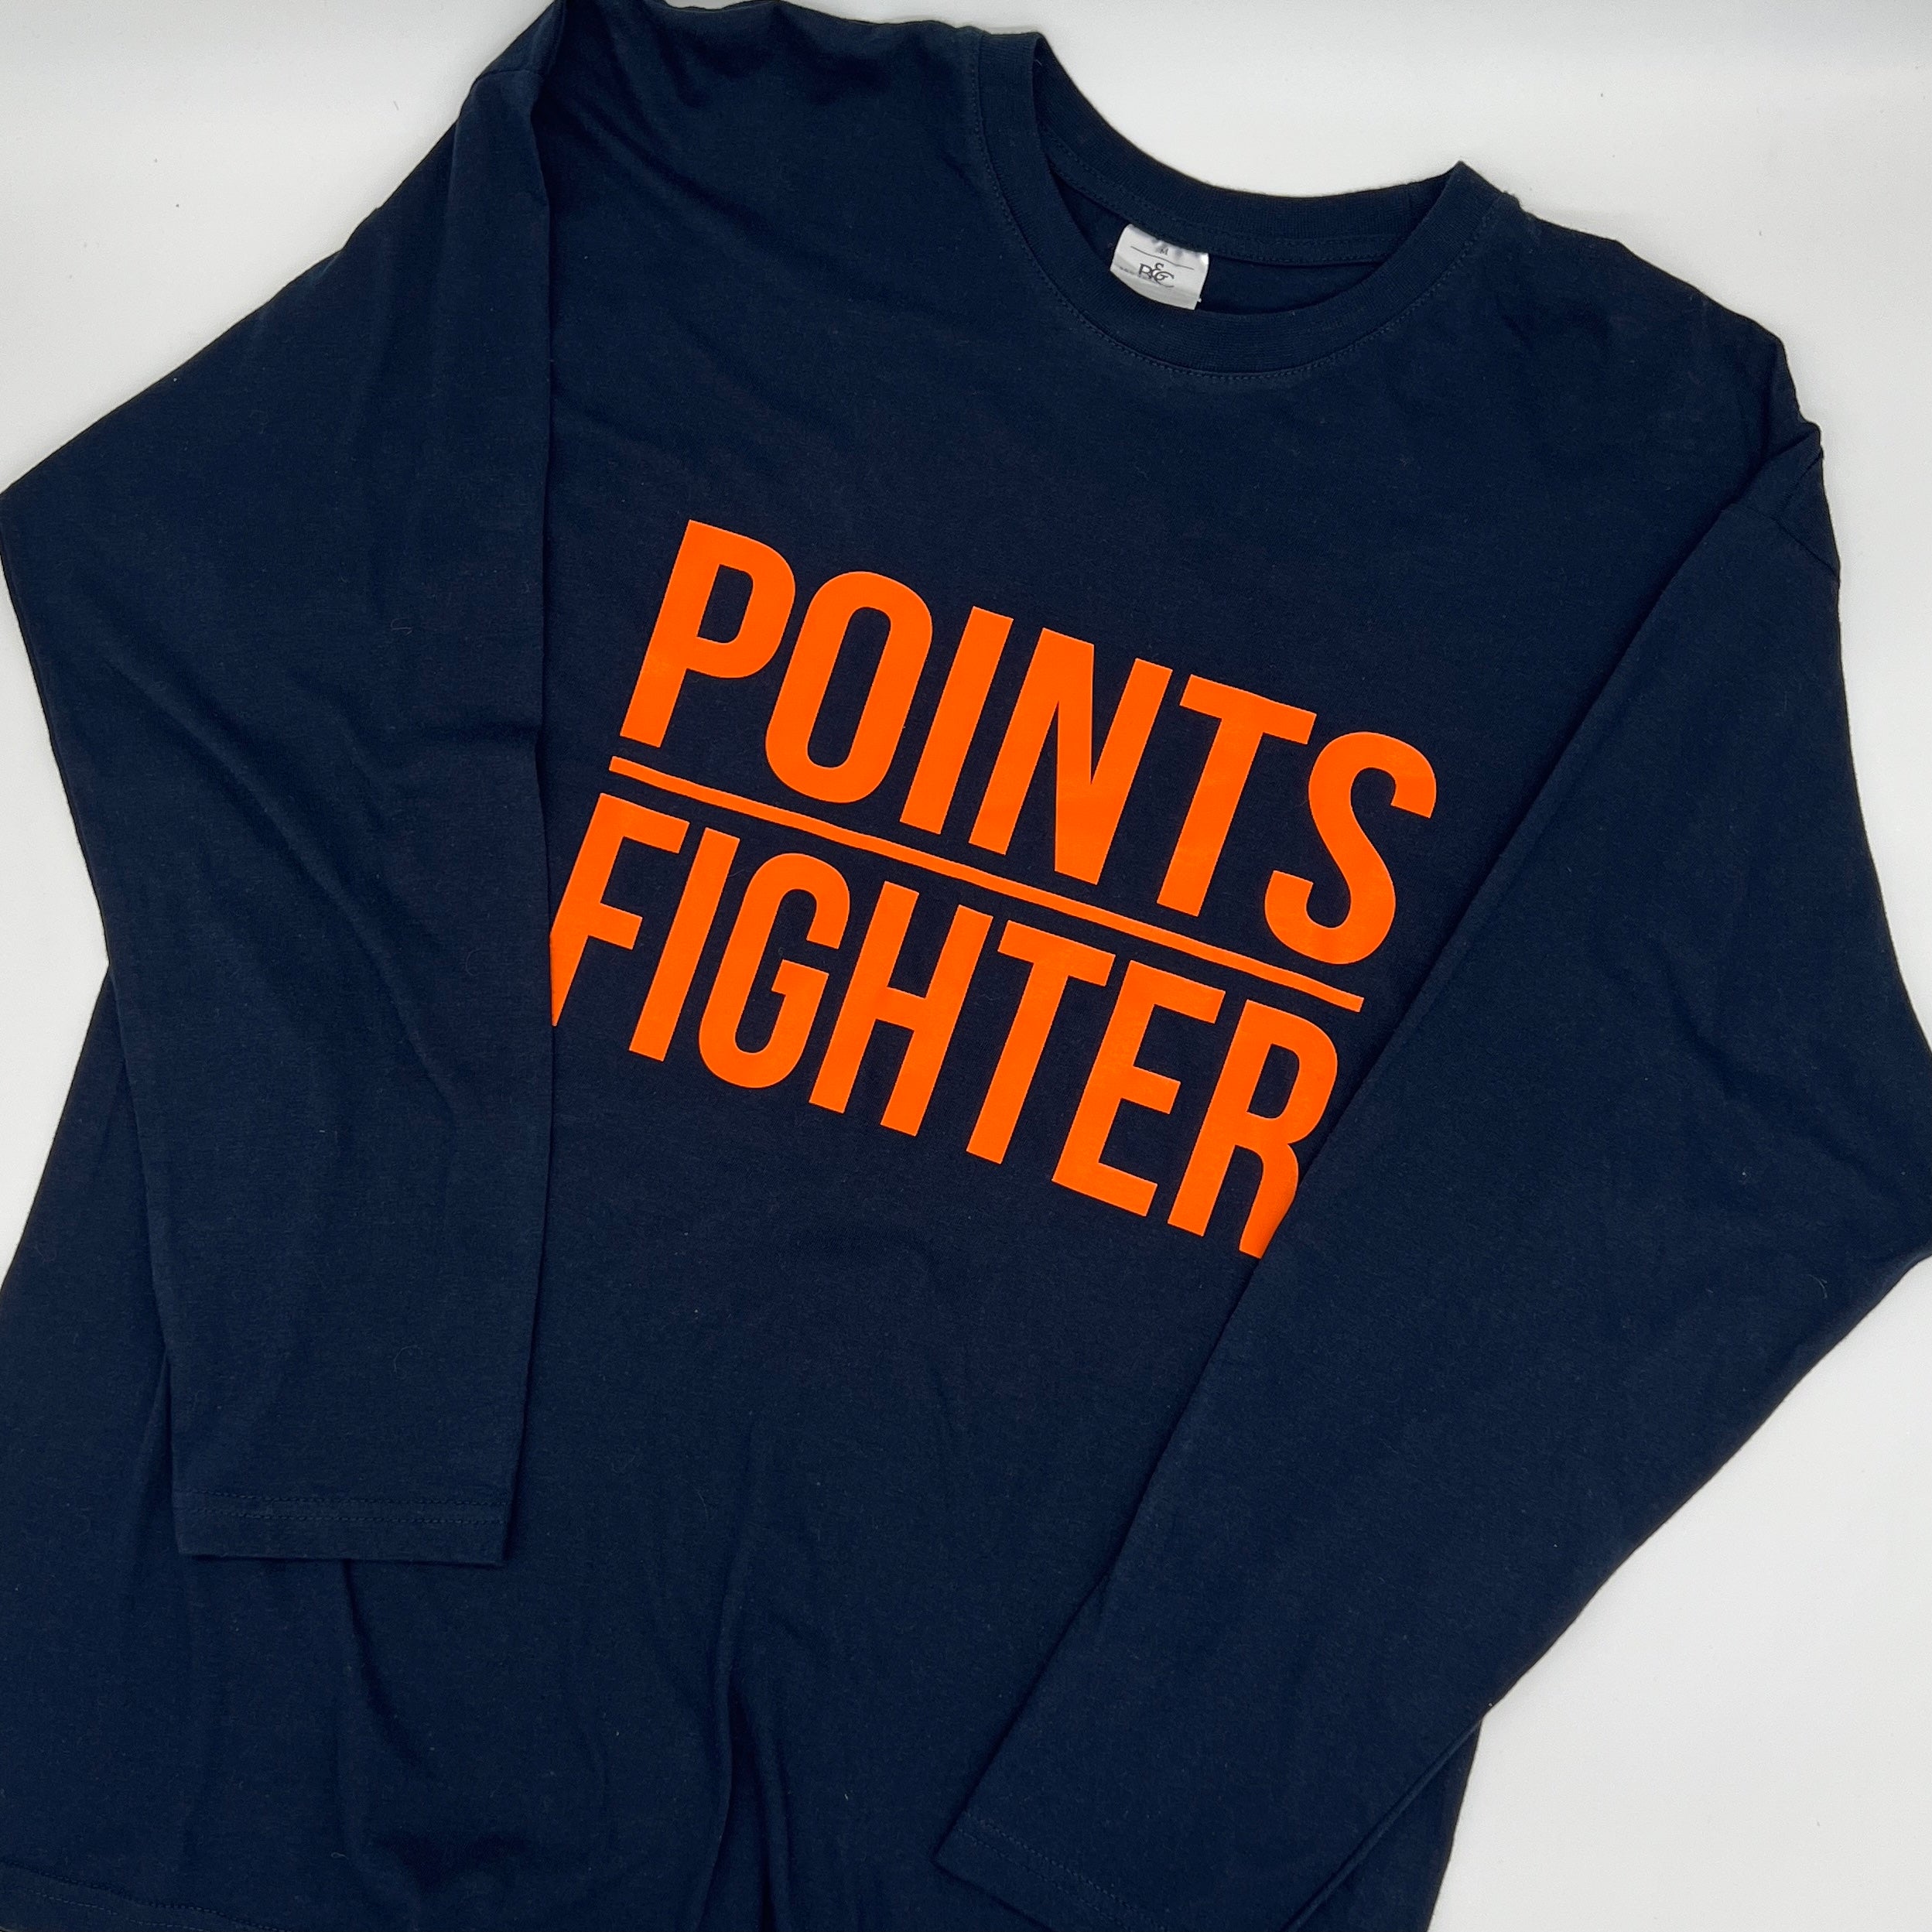 Points Fighter Long-Sleeved T-Shirt - Navy/Orange